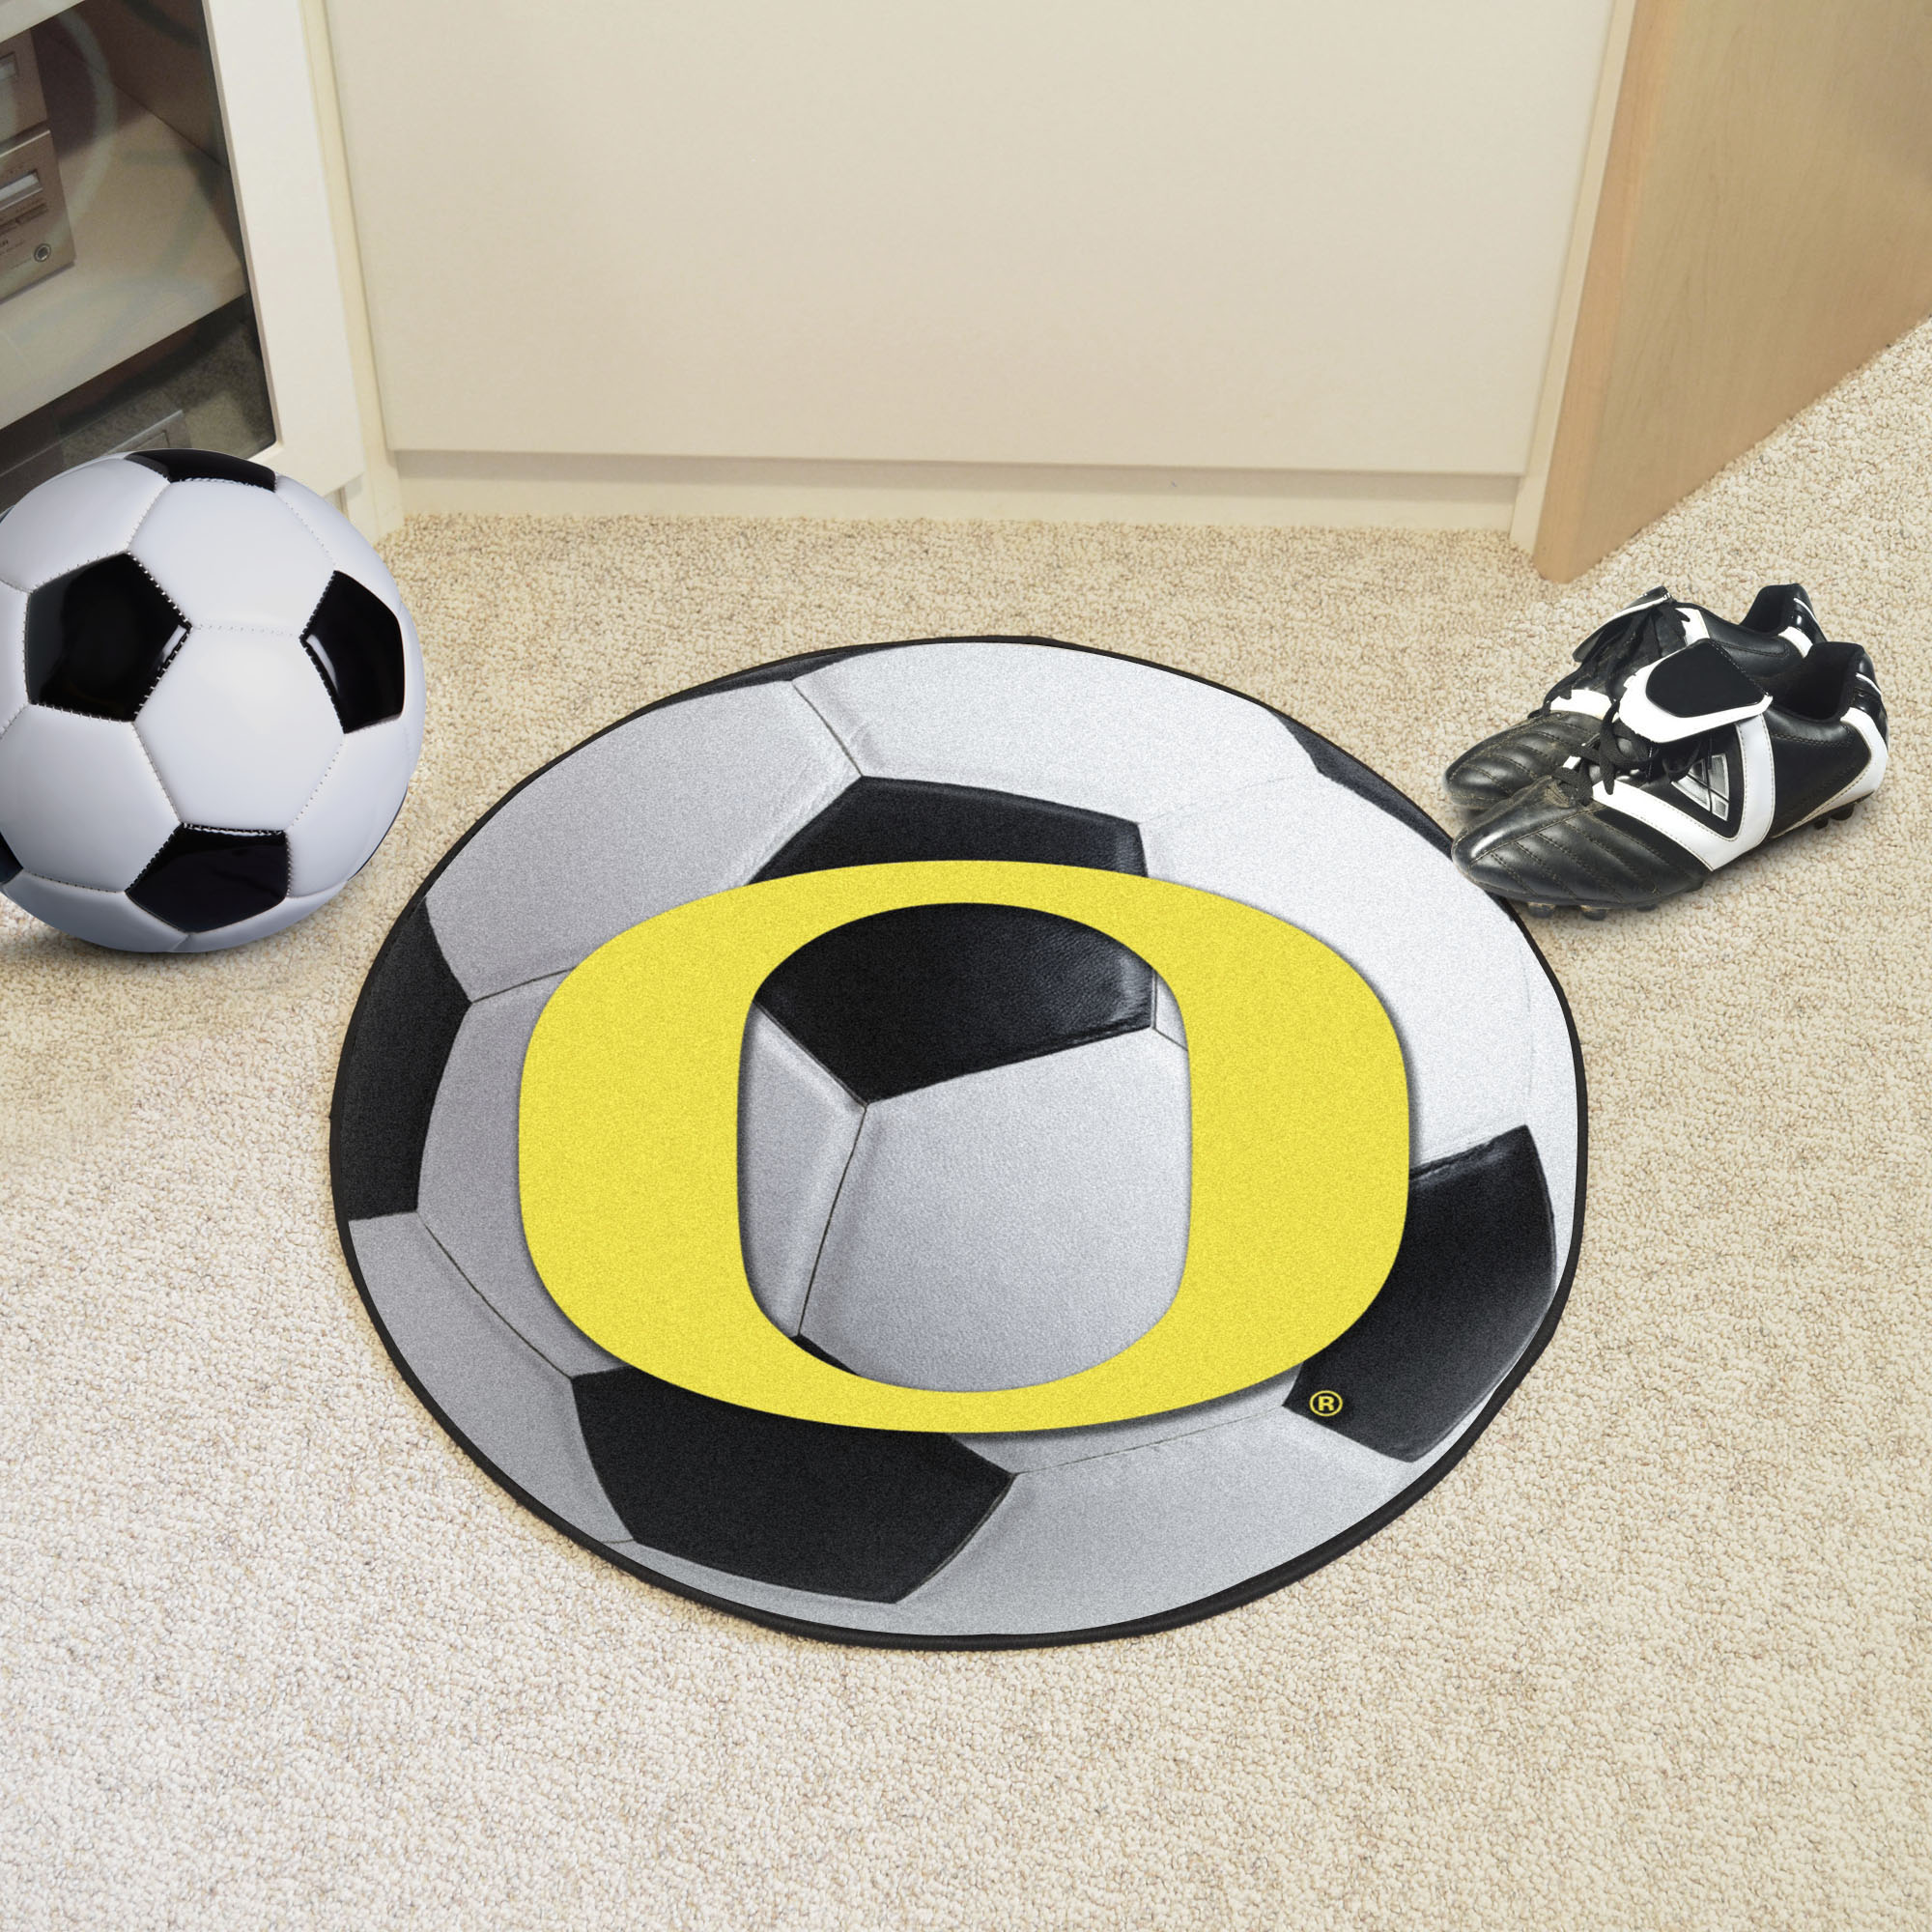 University of Oregon Ball Shaped Area Rugs (Ball Shaped Area Rugs: Soccer Ball)